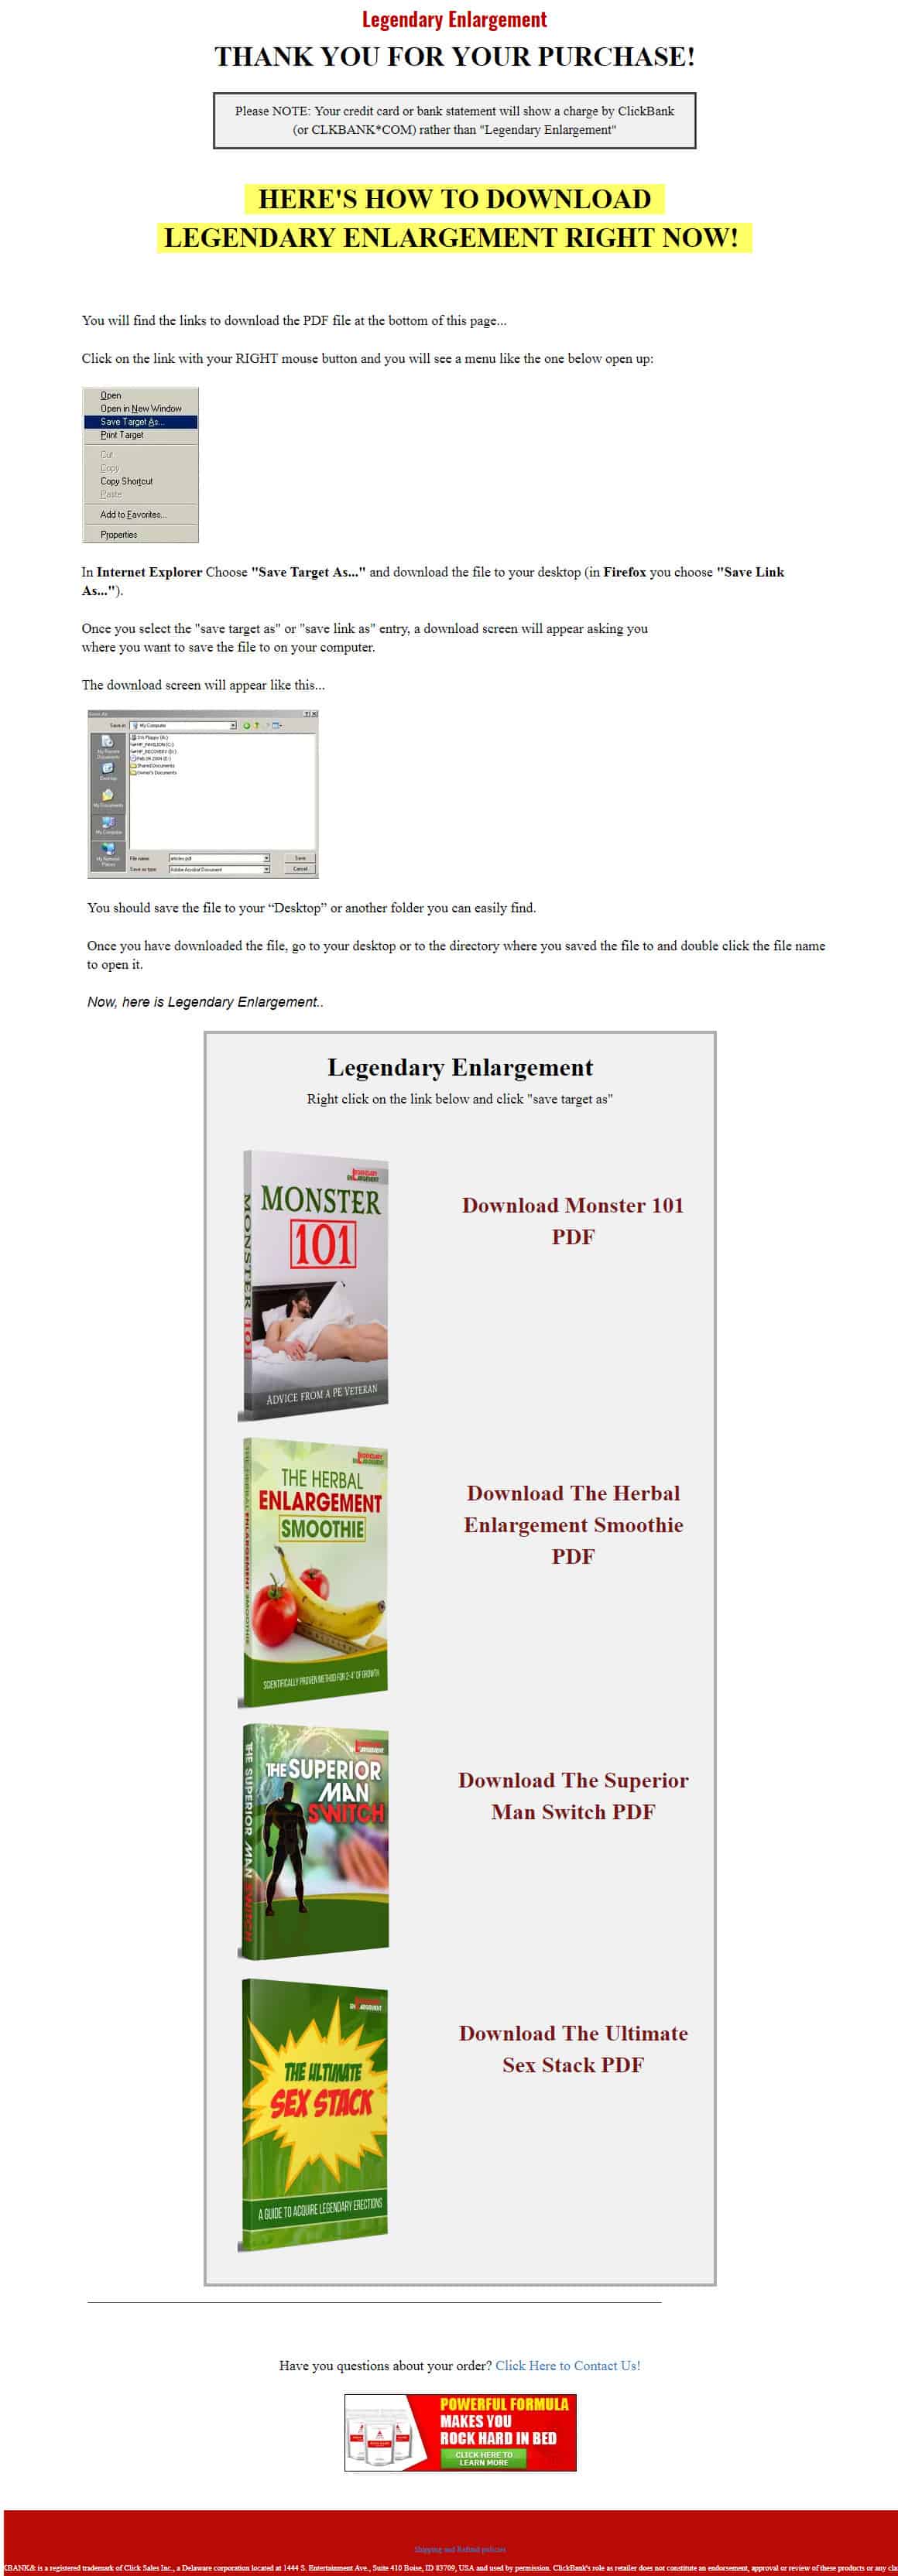 Legendary Enlargement Download Page